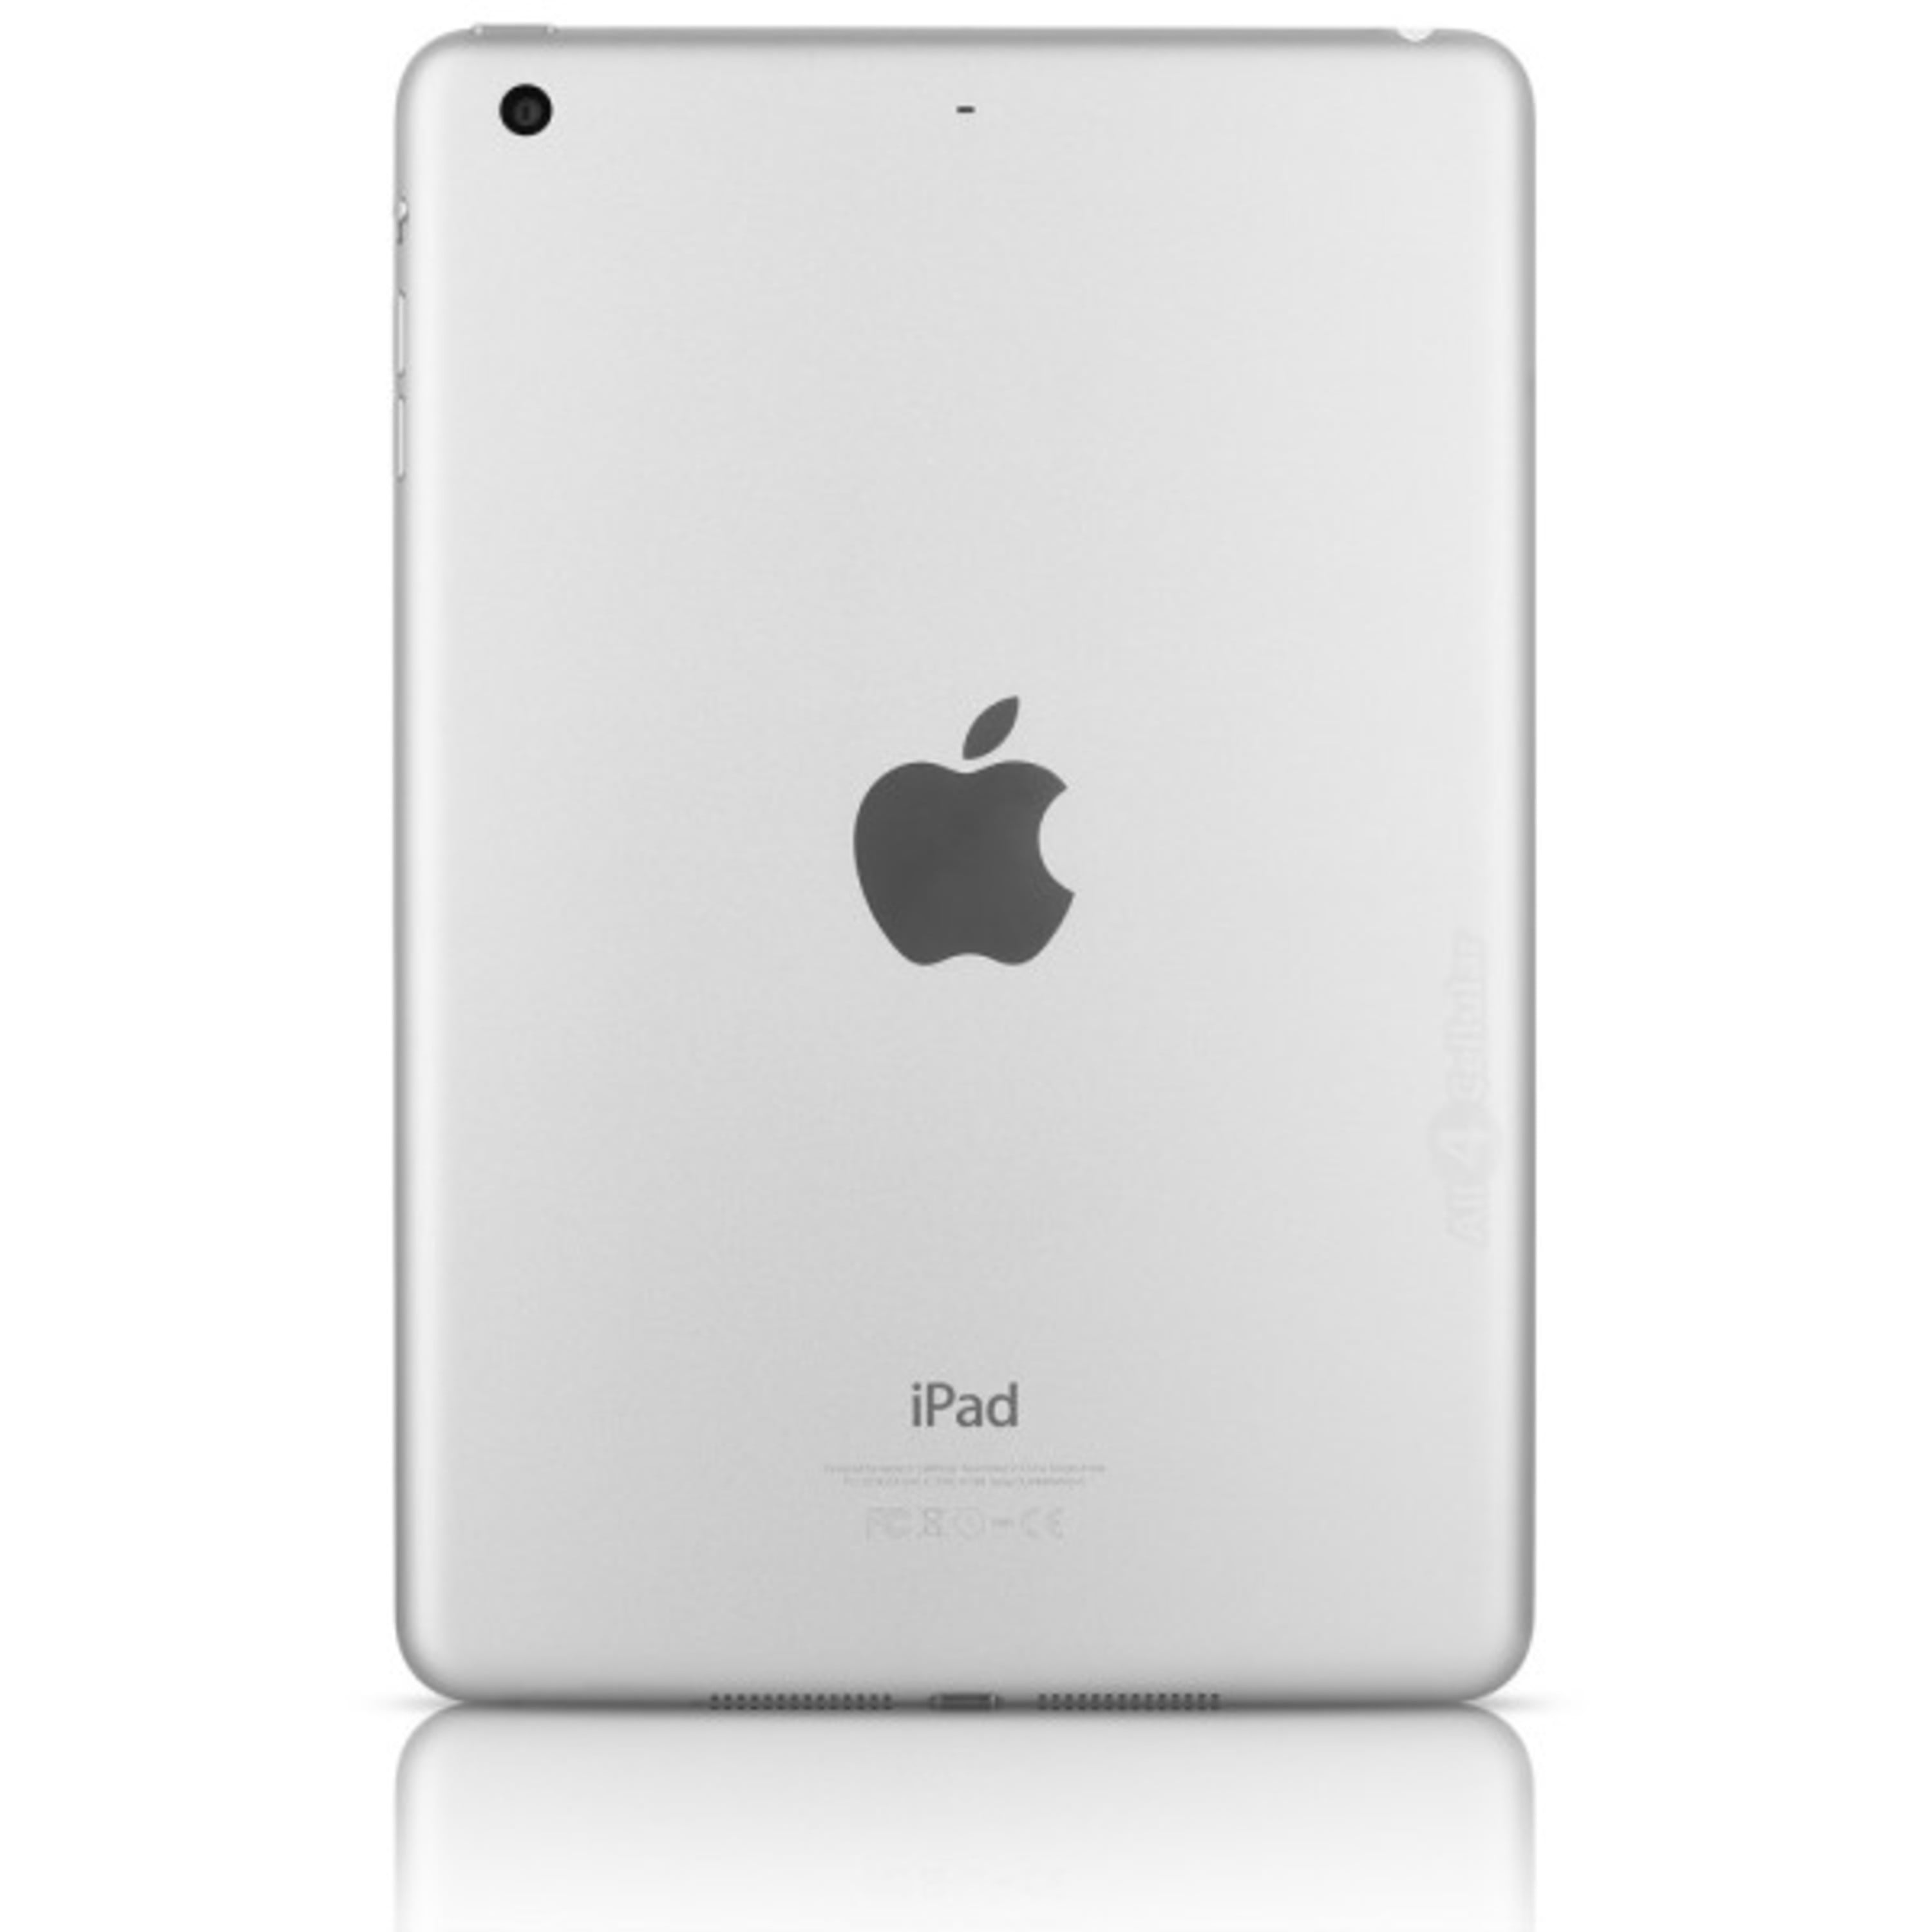 Apple+iPad+mini+2+32GB%2C+Wi-Fi+%2B+Cellular+%28Verizon%29%2C+7.9in+-+Space+Gray  for sale online